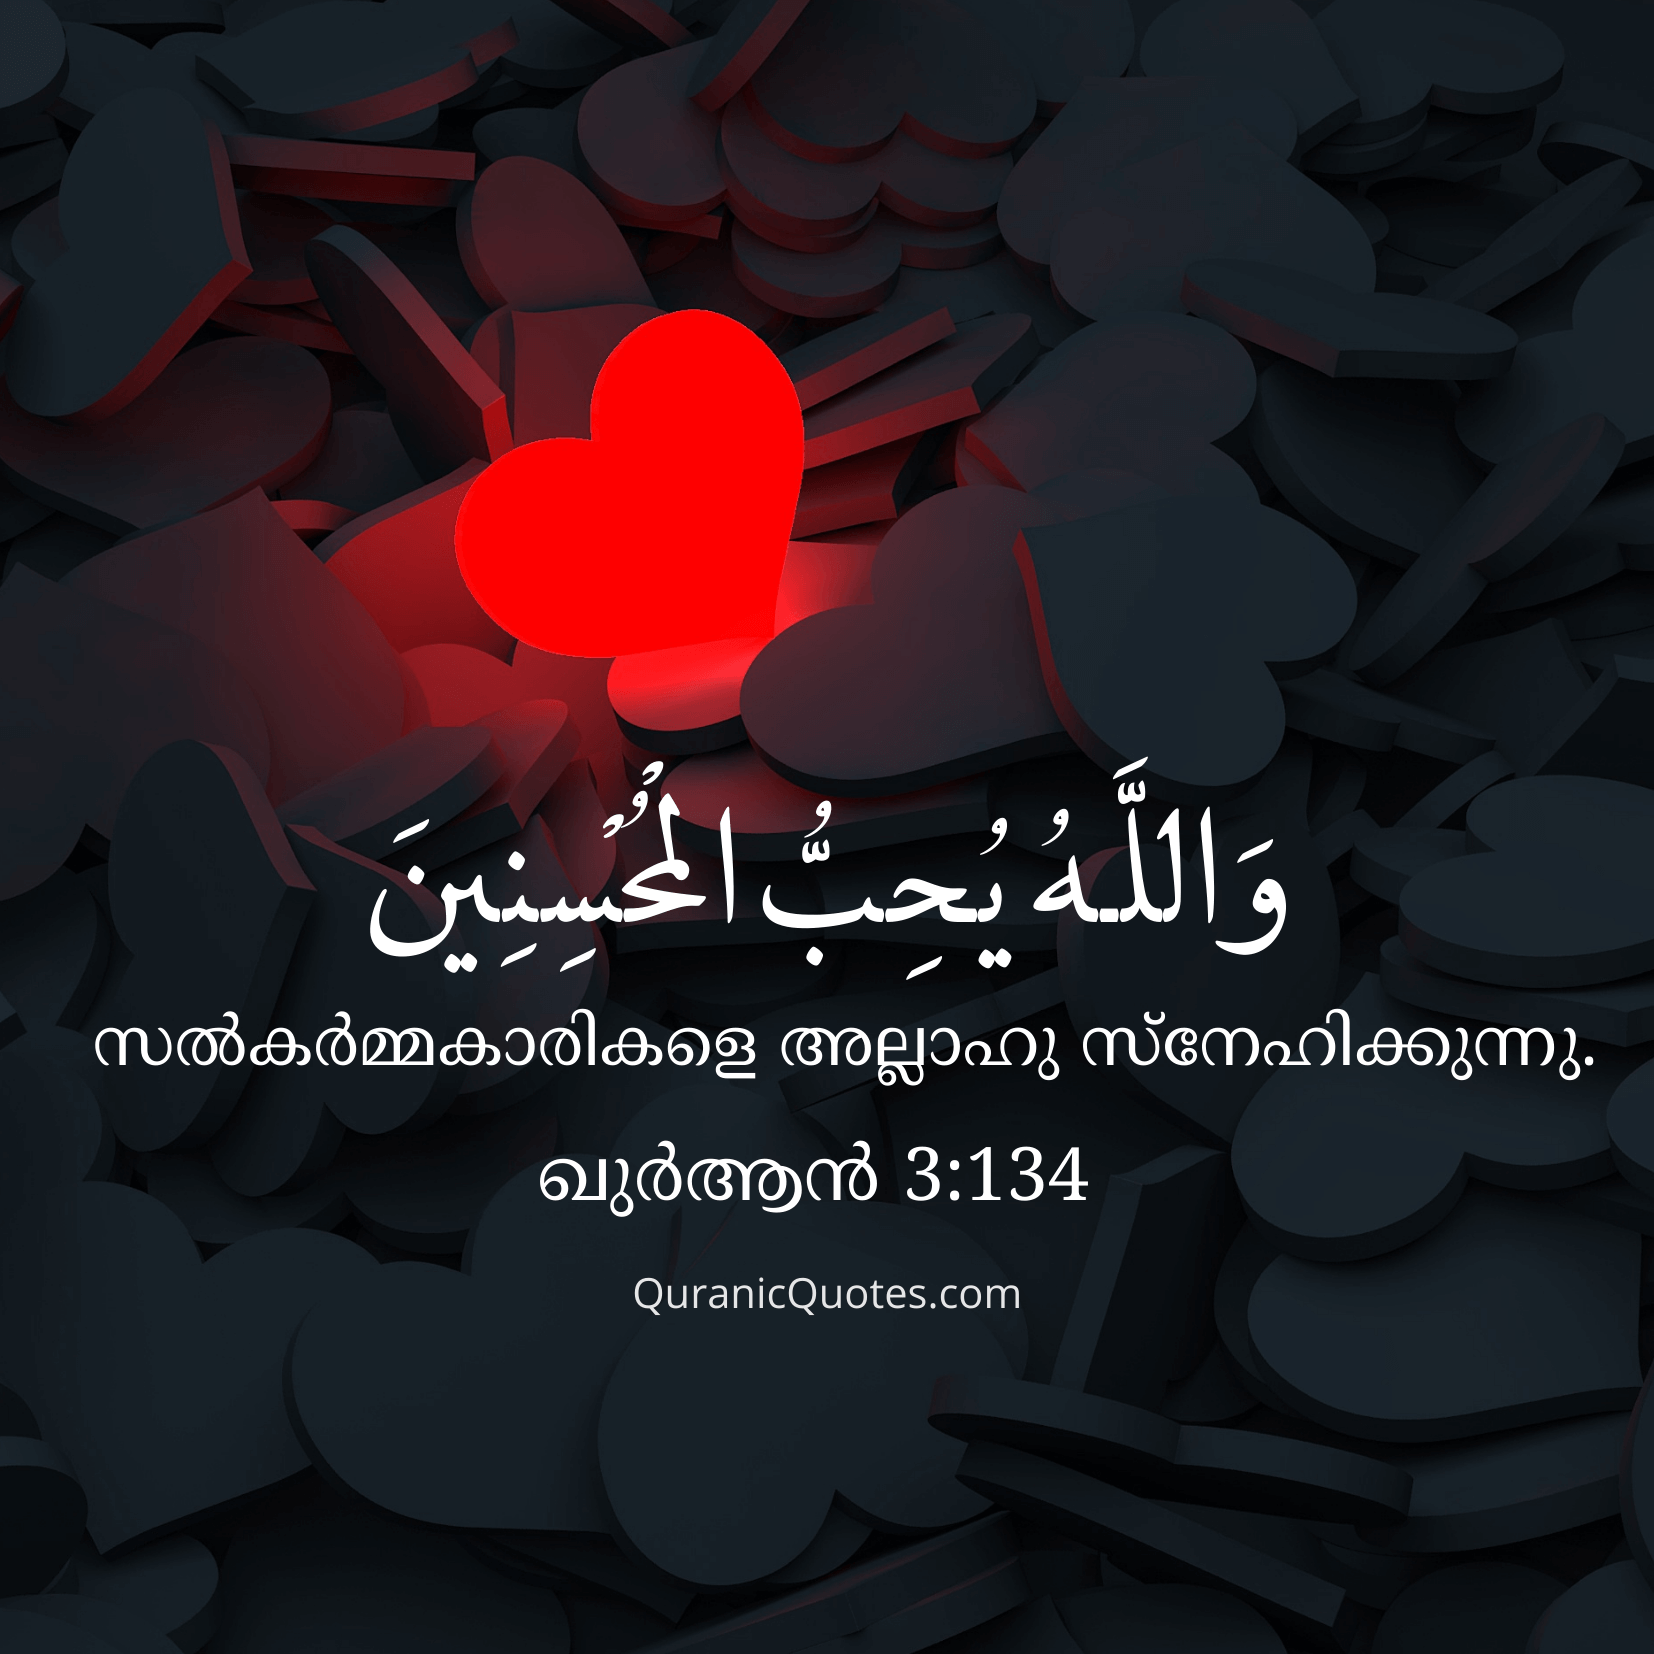 Quranic Quotes in Malayalam 3:134